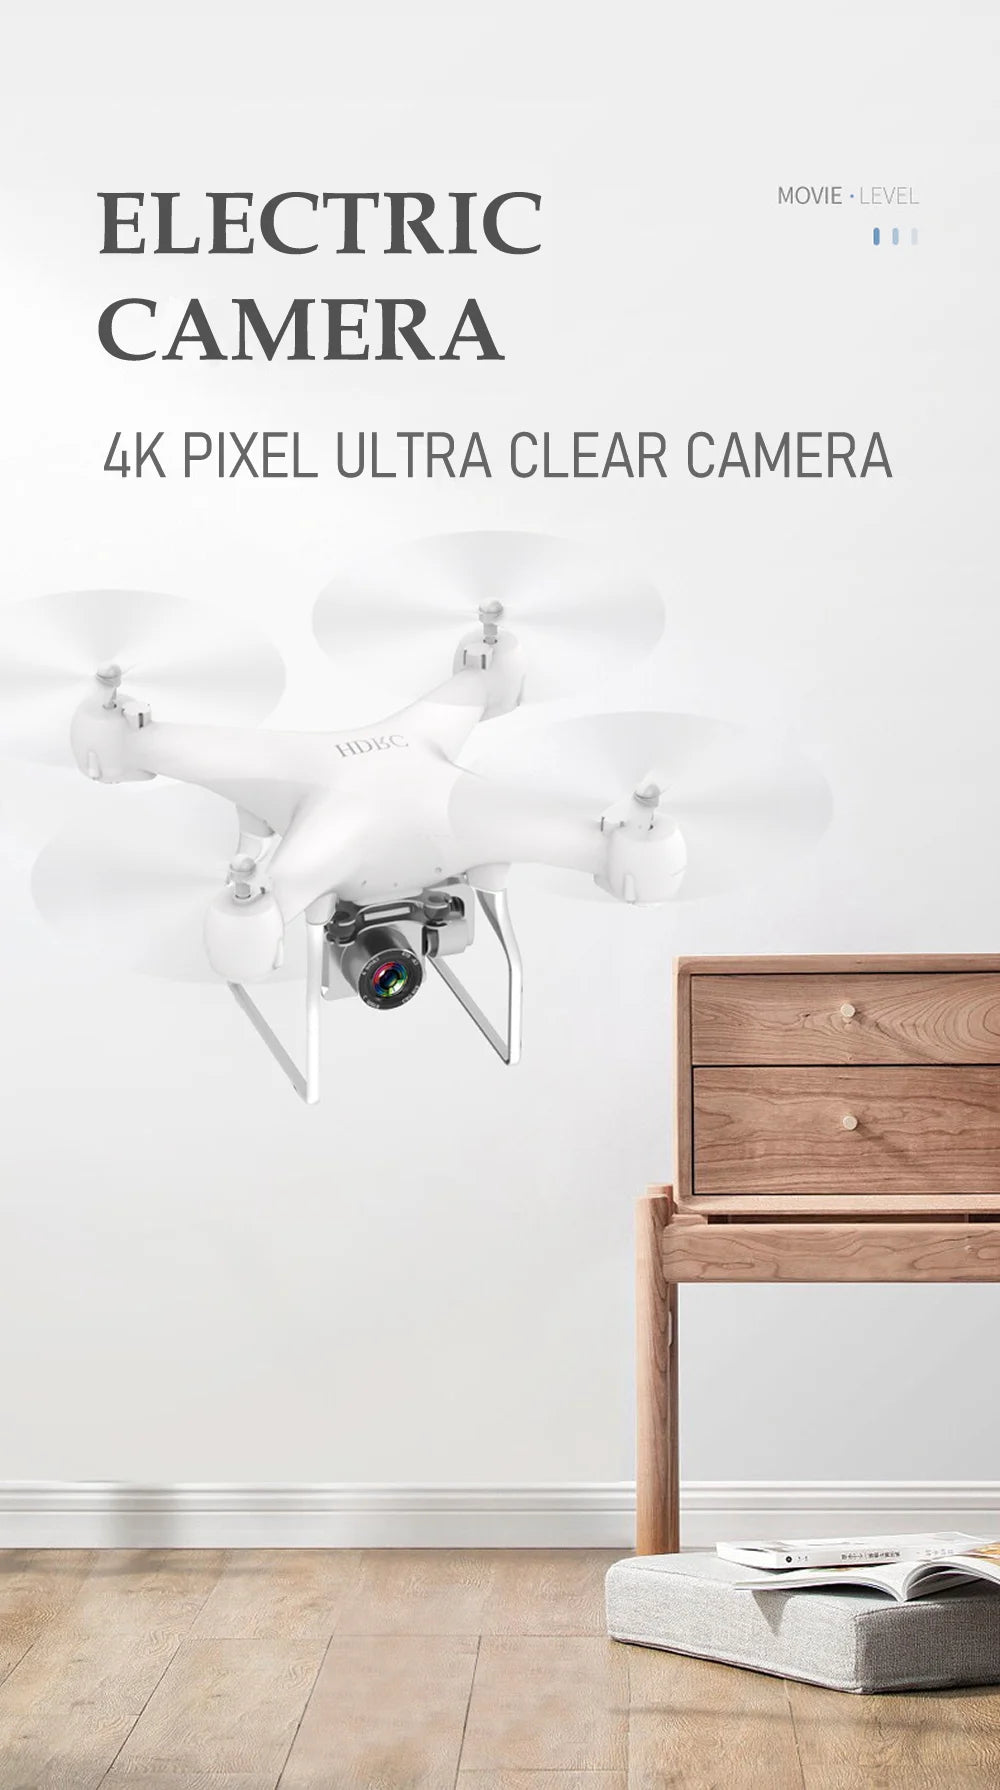 RC Drone, level electric camera 4k pixel ultra clear camera 1i( 